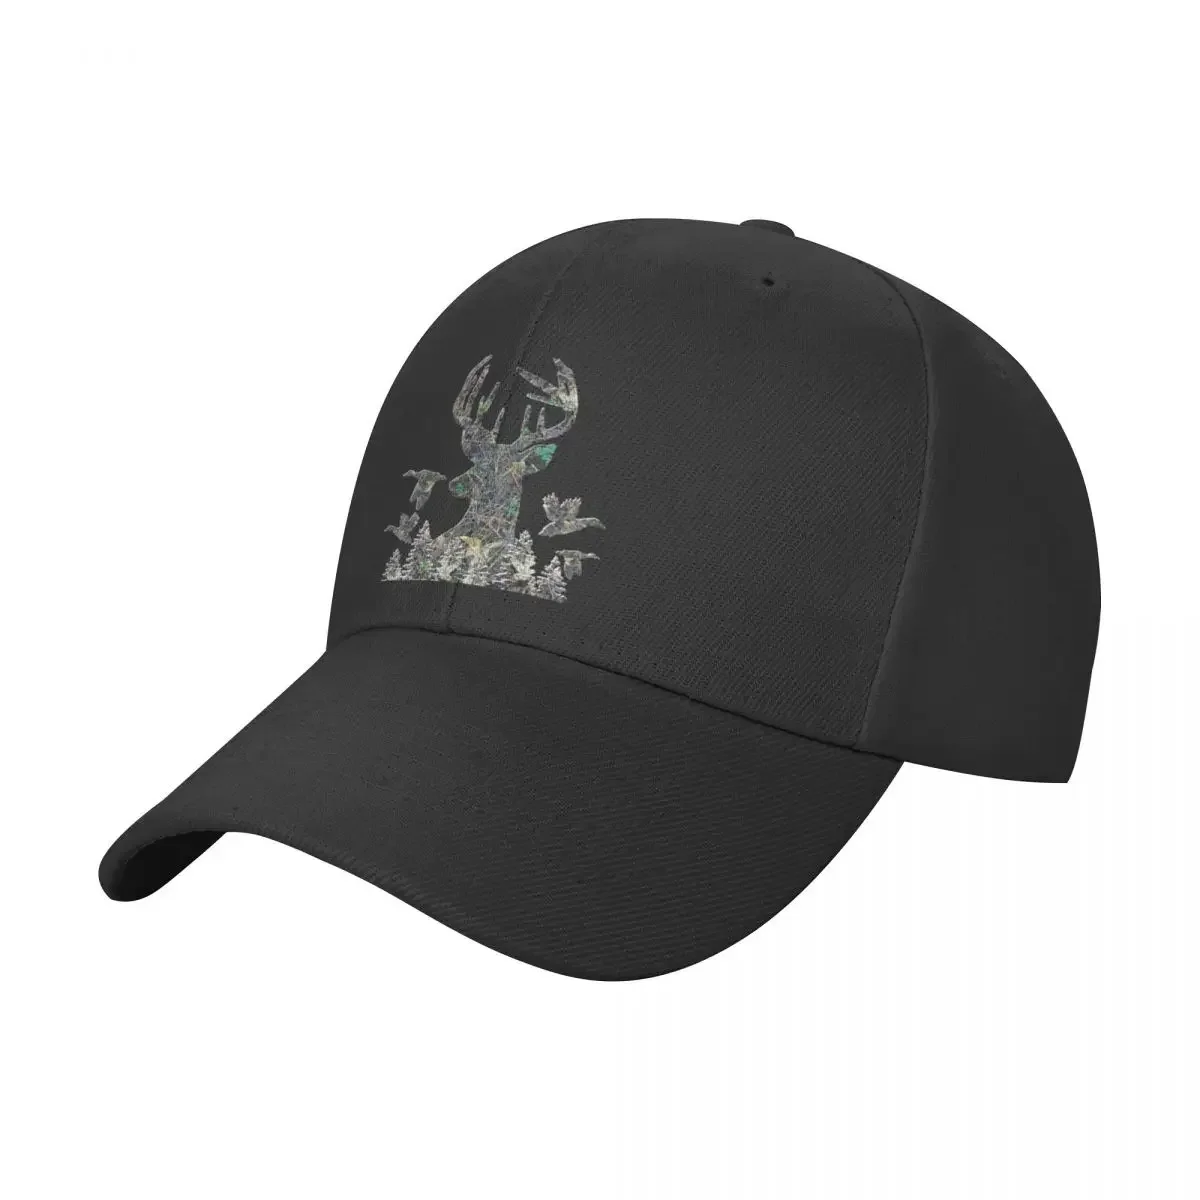 

Camouflage Whitetail Buck Deer, Camo Flying Ducks, Deer Hunting Camo Design Baseball Cap Snap Back Hat Hats For Women Men's